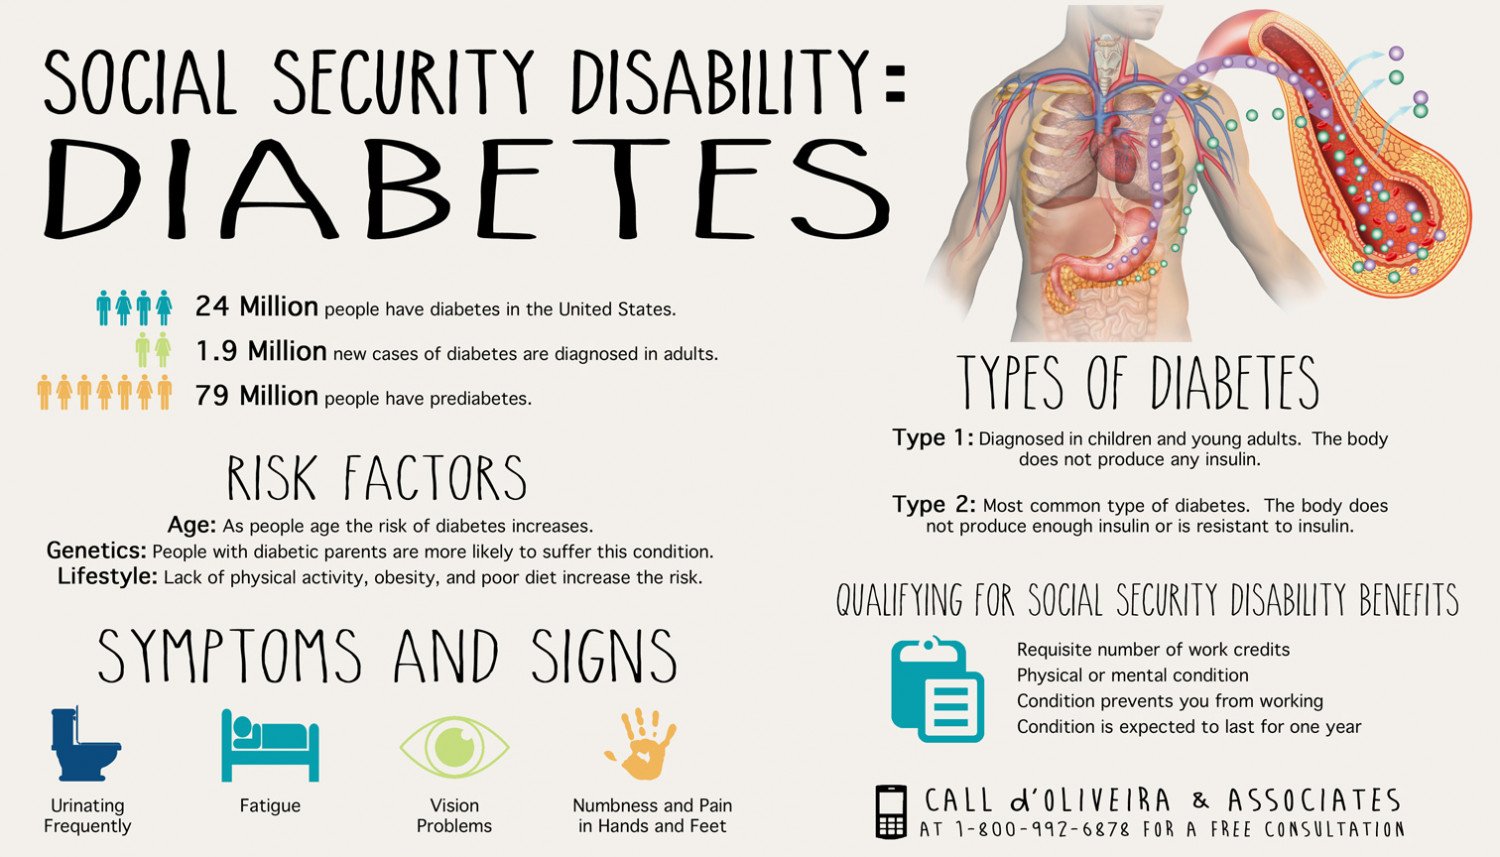 Social Security Disability: Diabetes